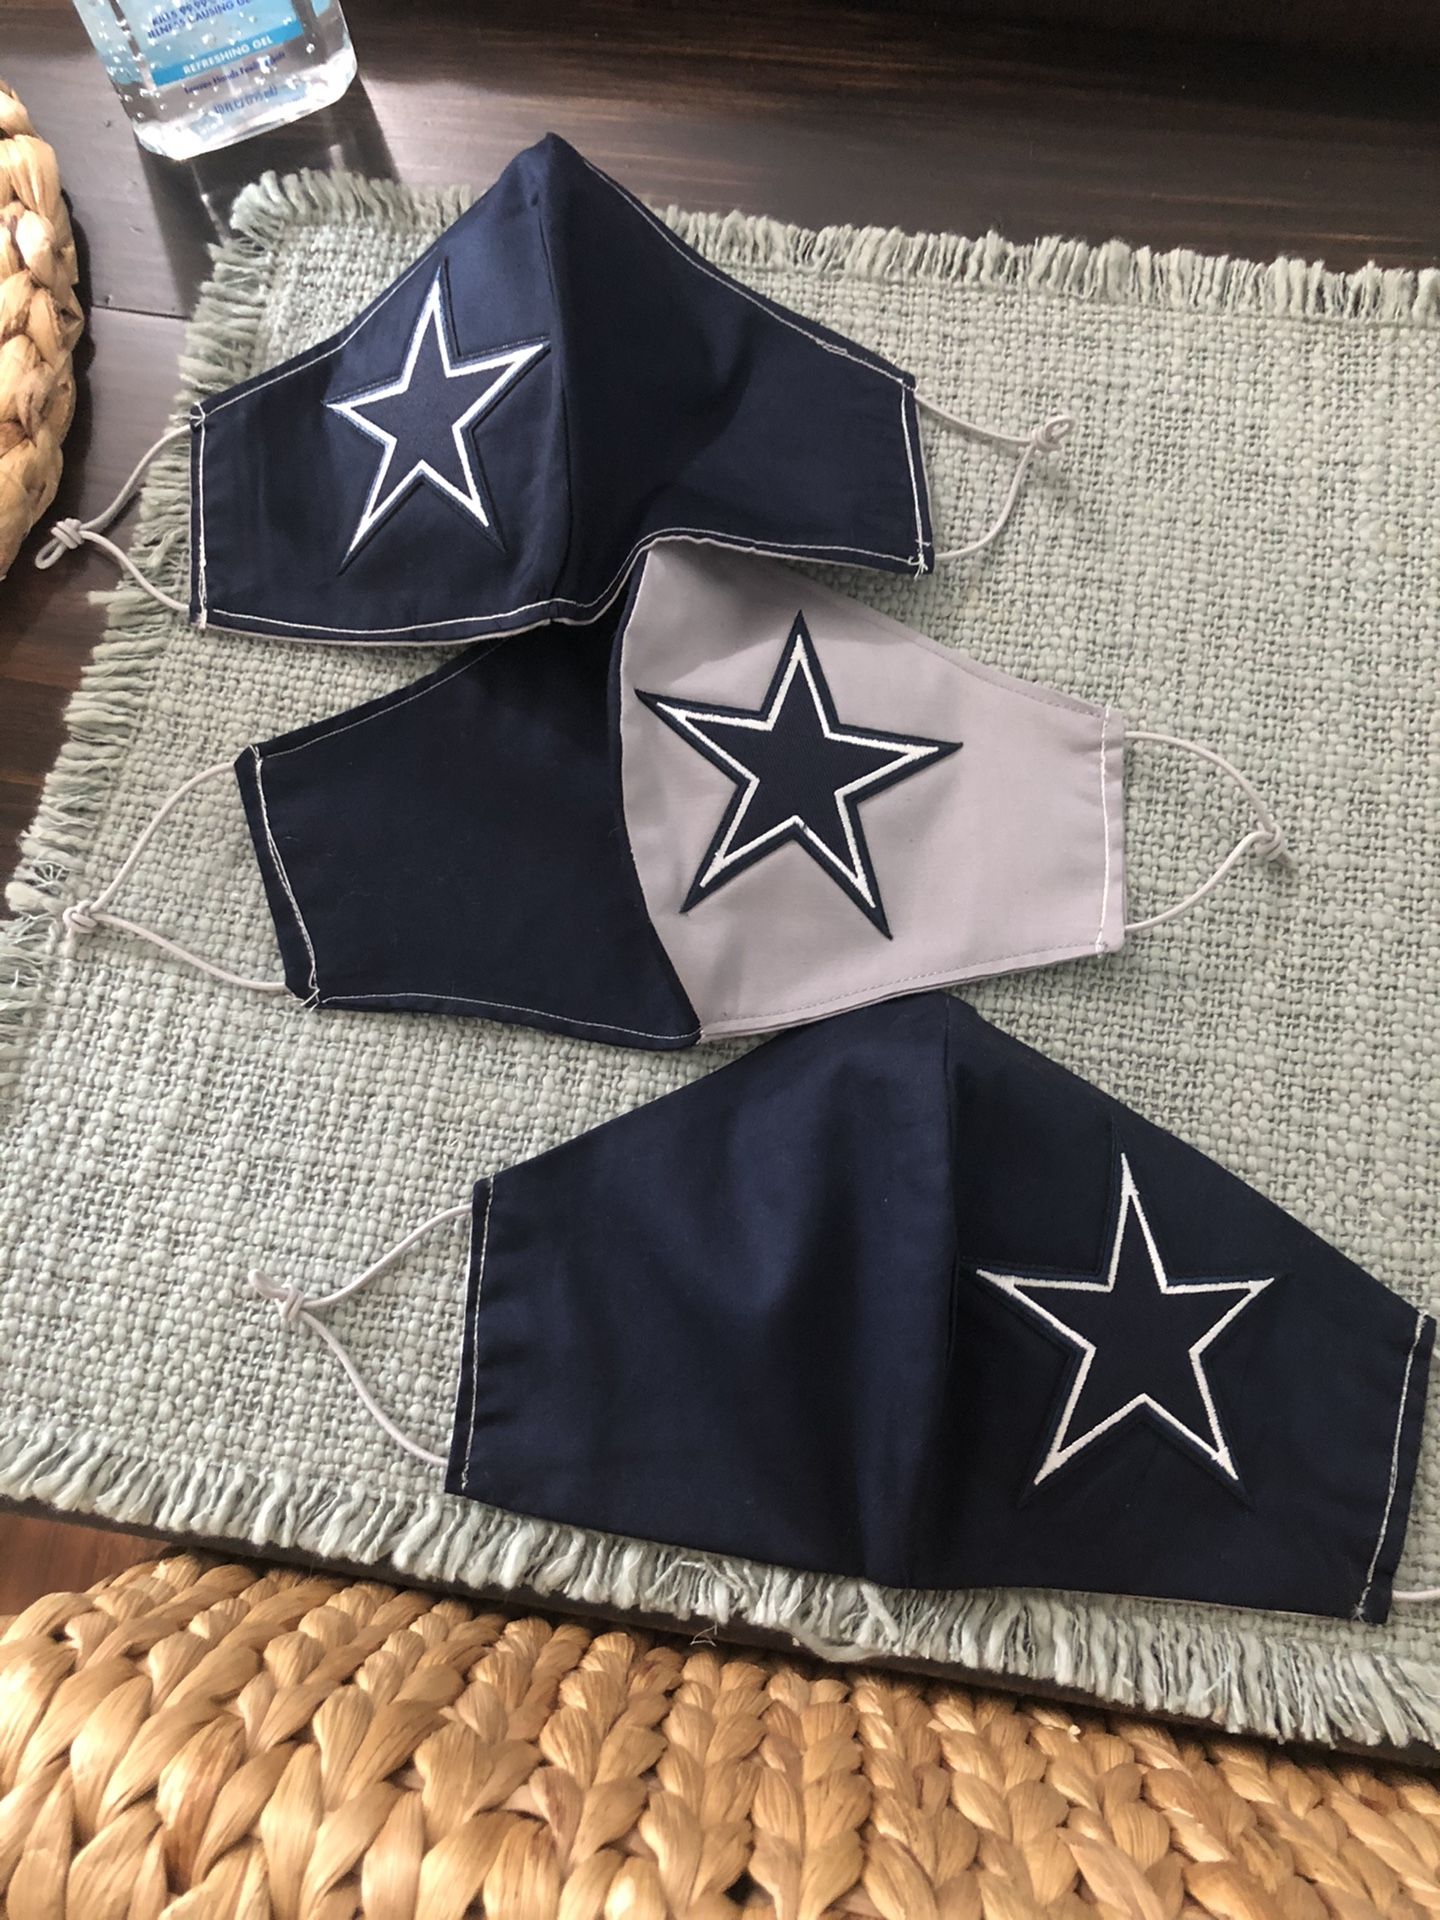 Dallas Cowboys Mask 😷 😘 $15 Each